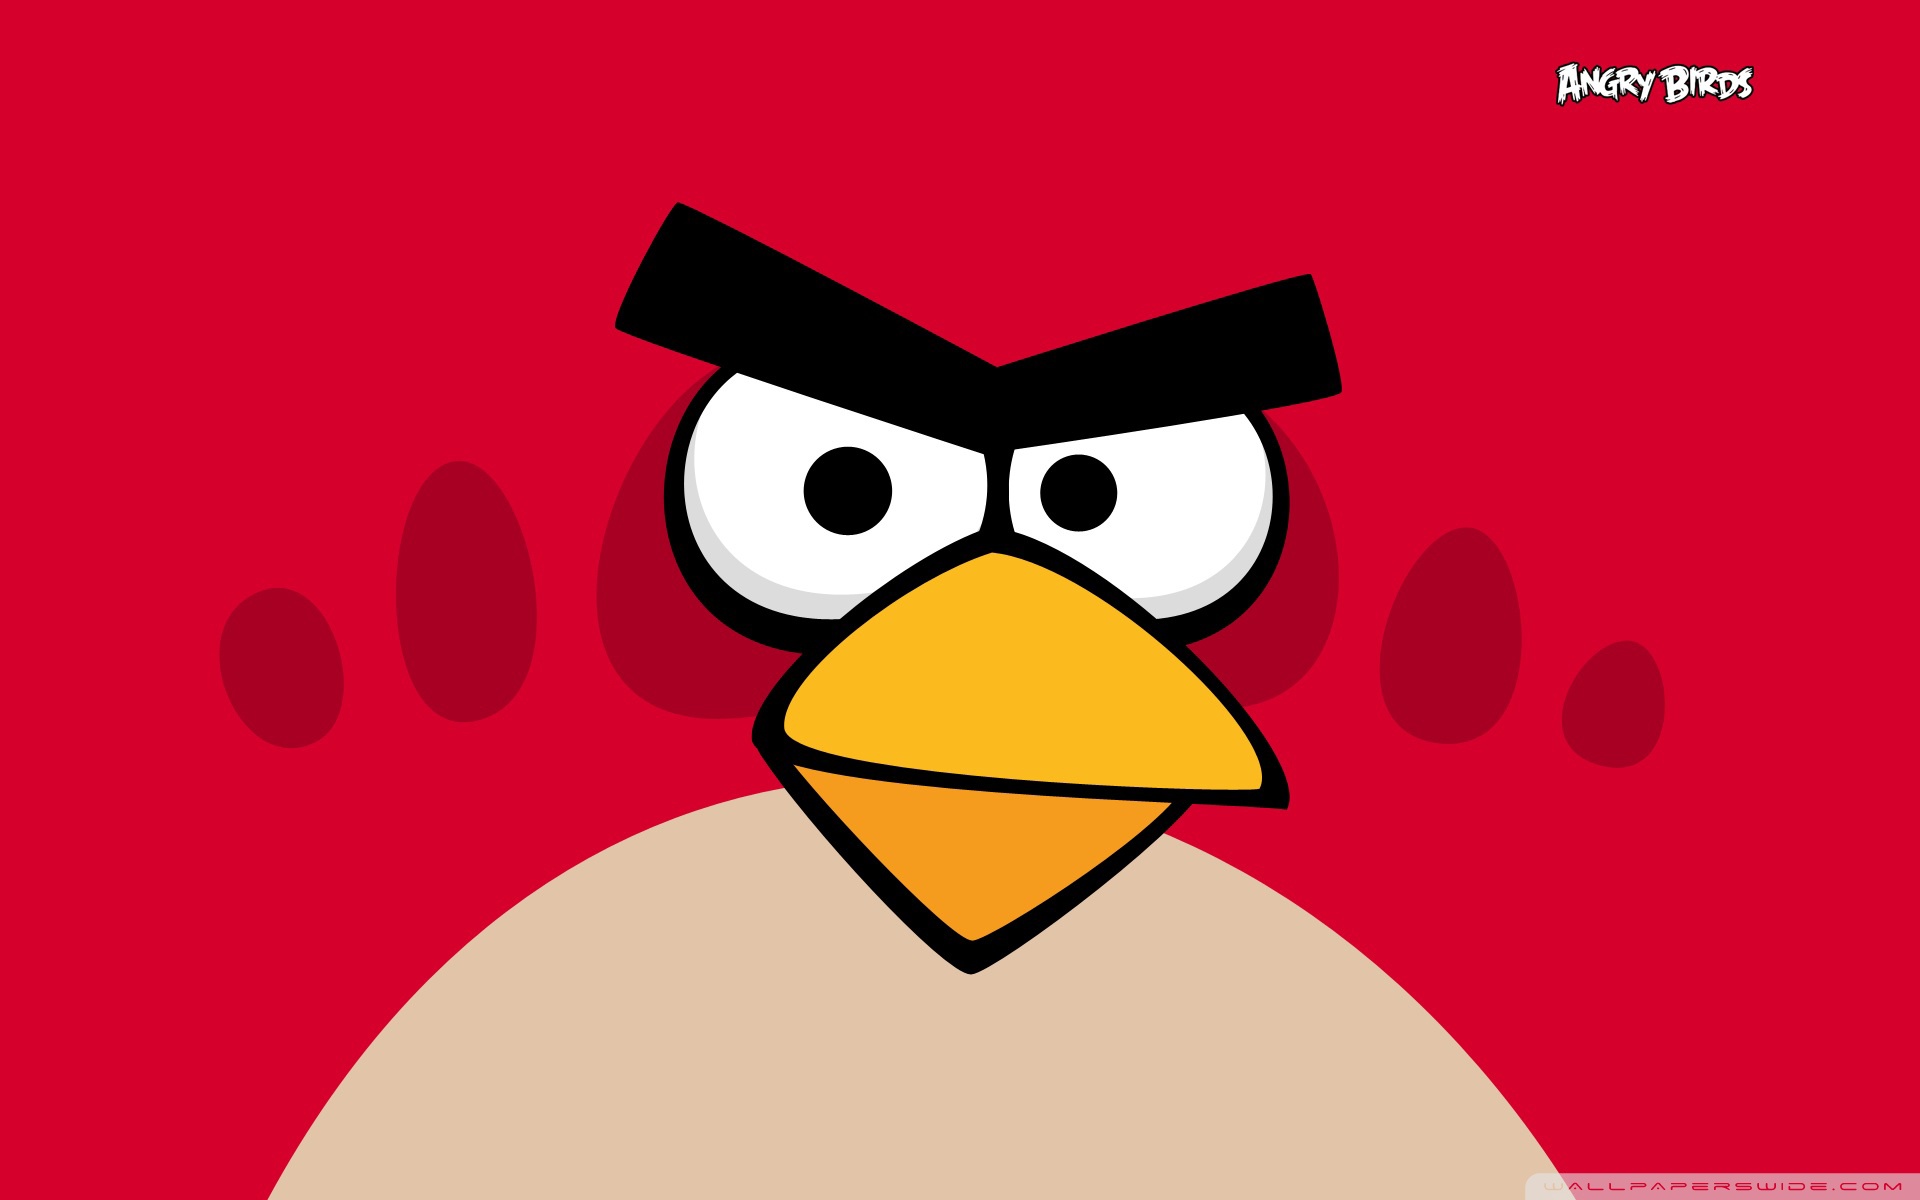 Angry Birds Red Bird Ultra Hd Desktop Background Wallpaper For 4k Uhd Tv Tablet Smartphone